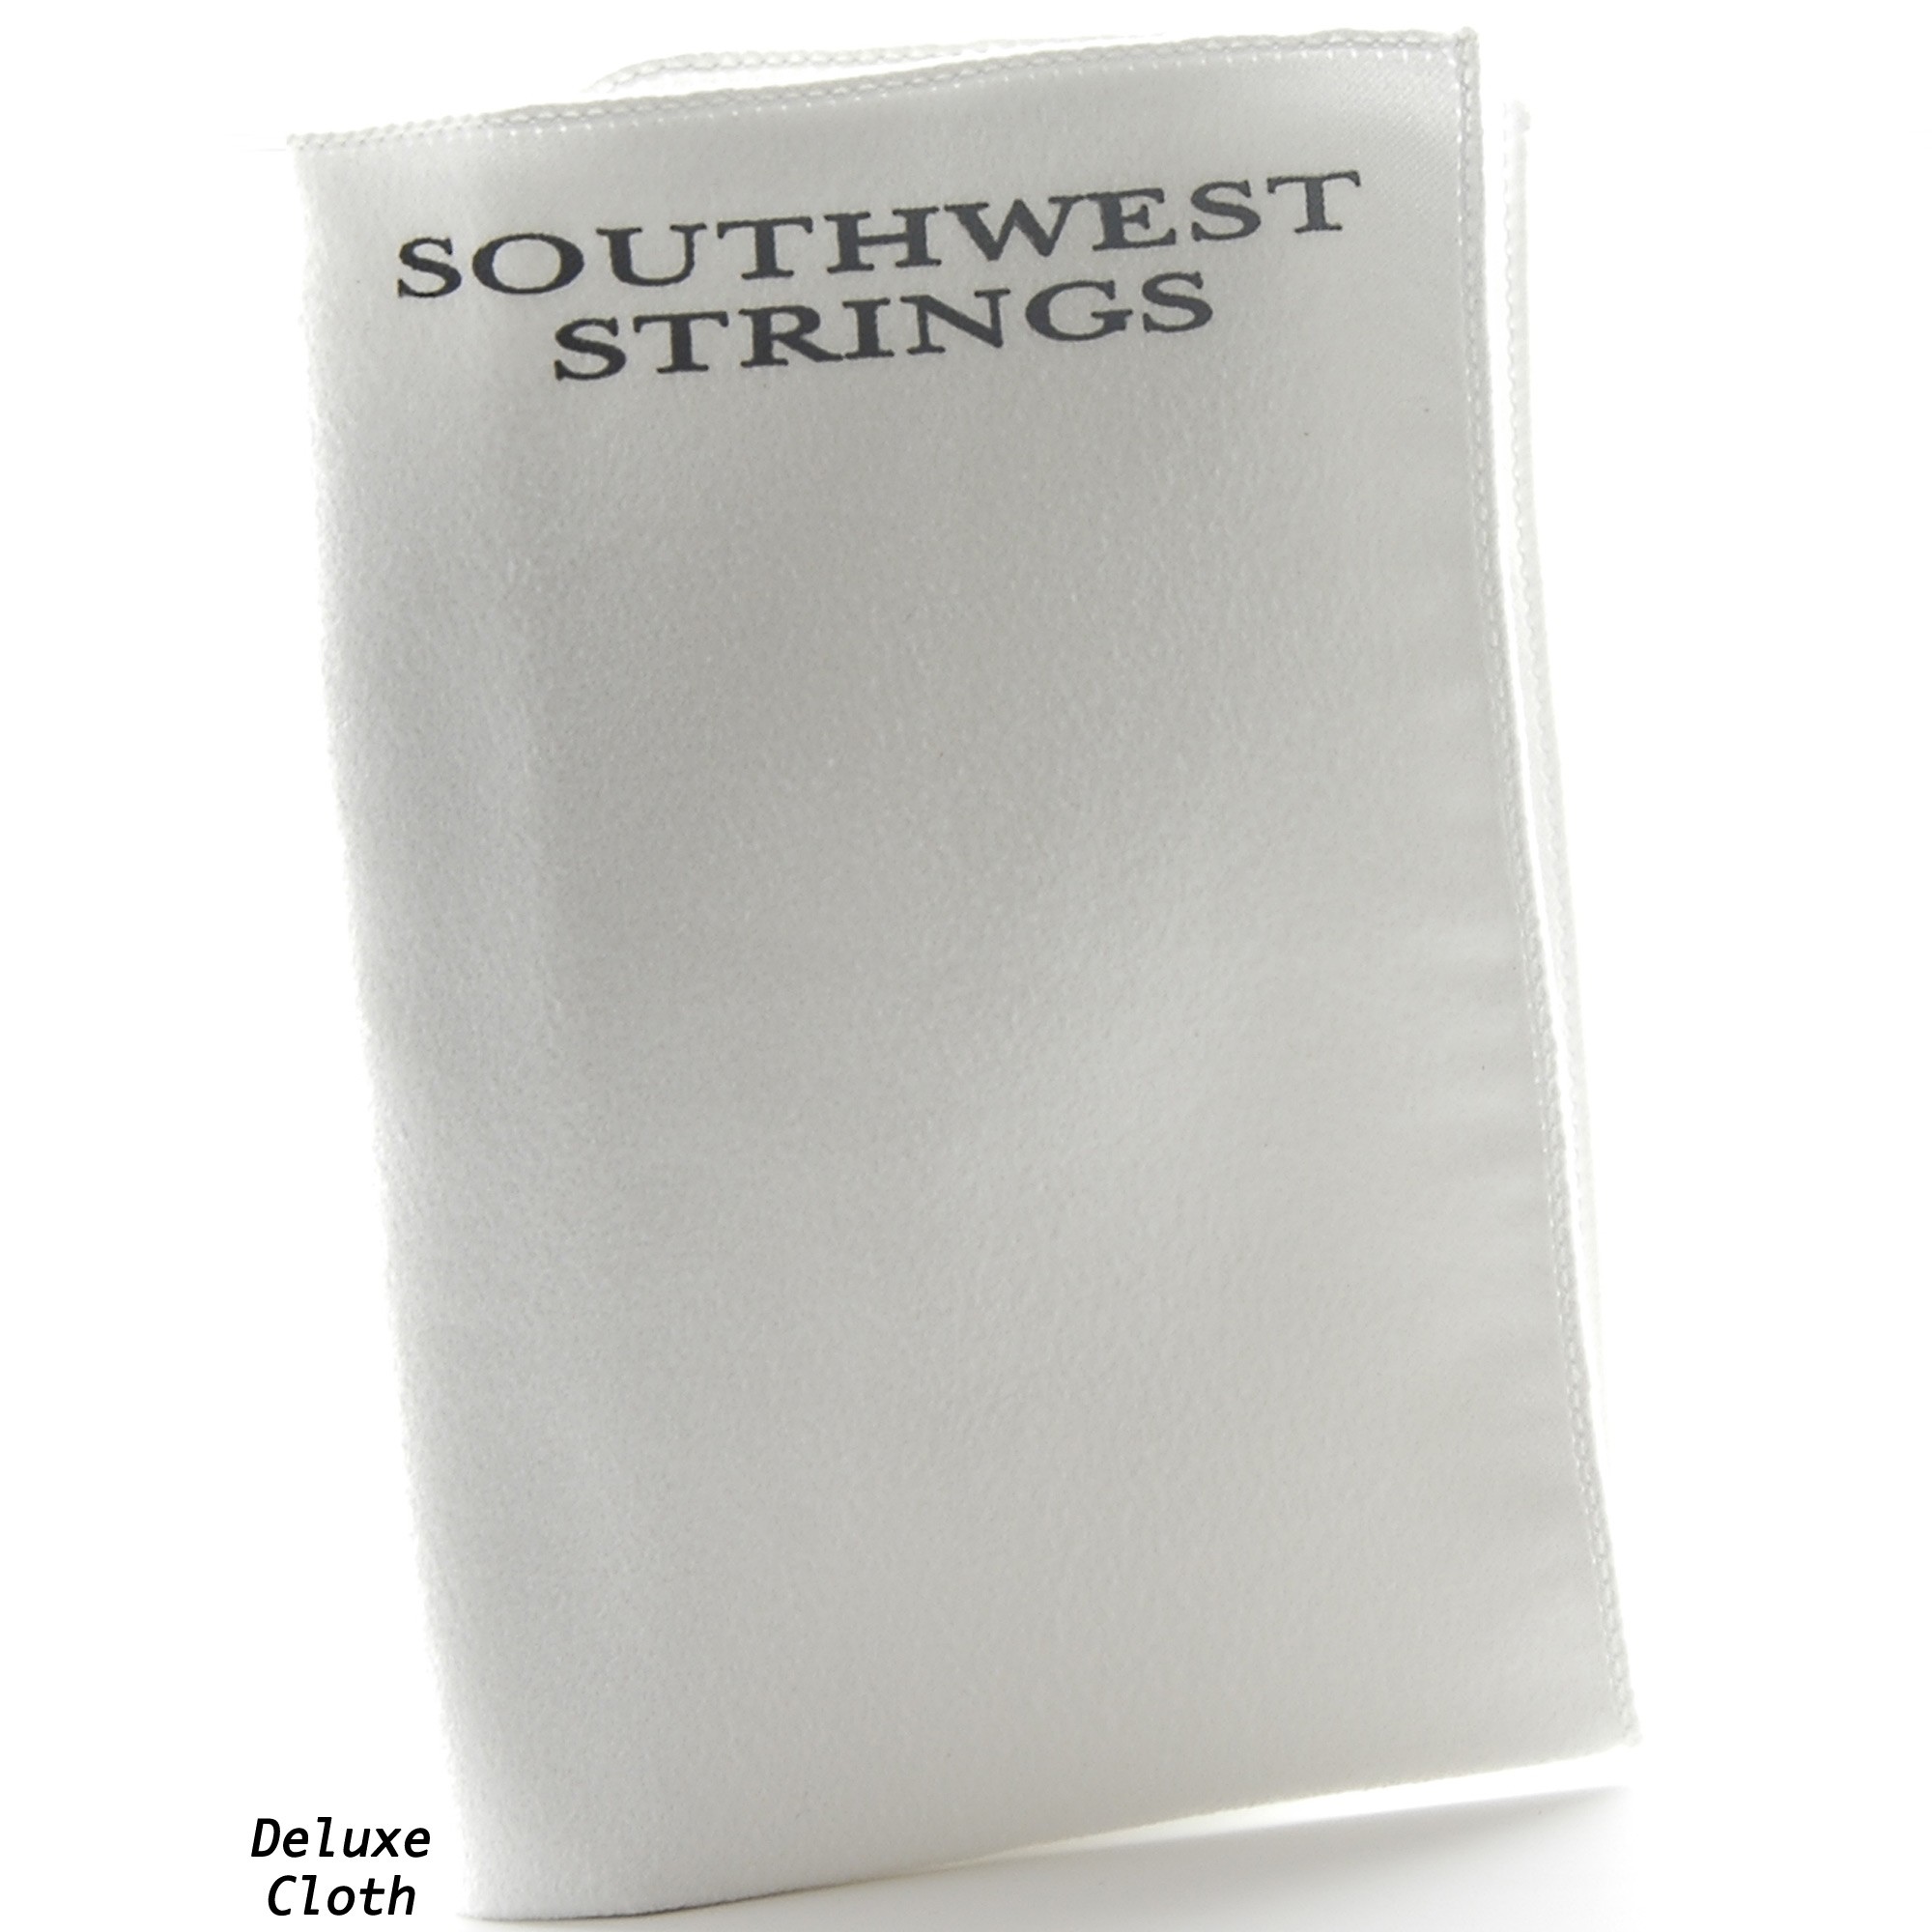 Polish & Cloths, Southwest Strings